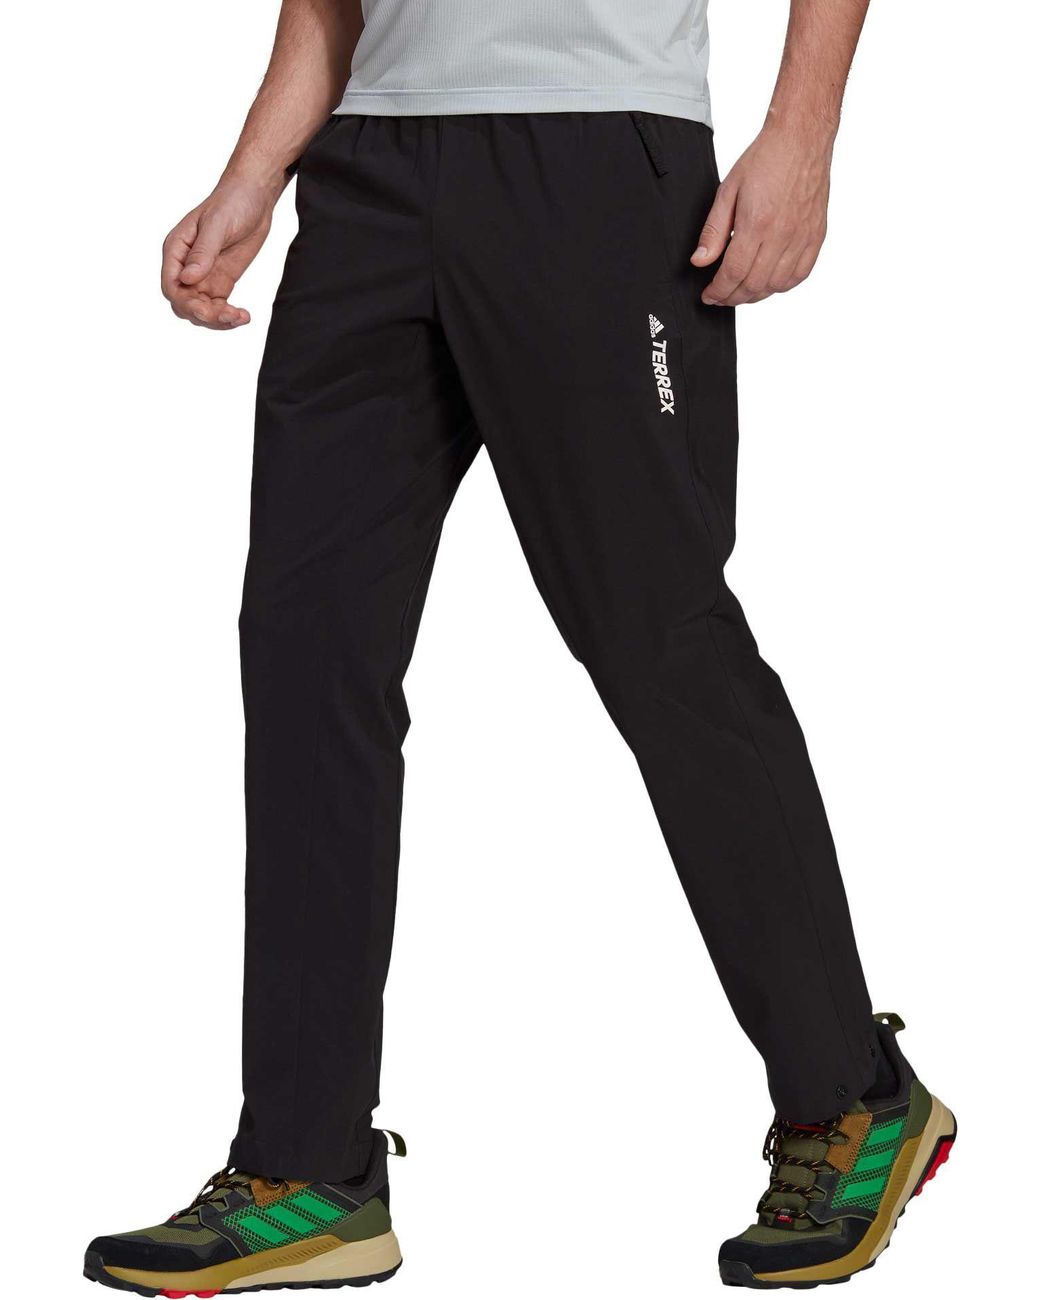 adidas Liteflex Hiking Pants in Black for Men - Lyst